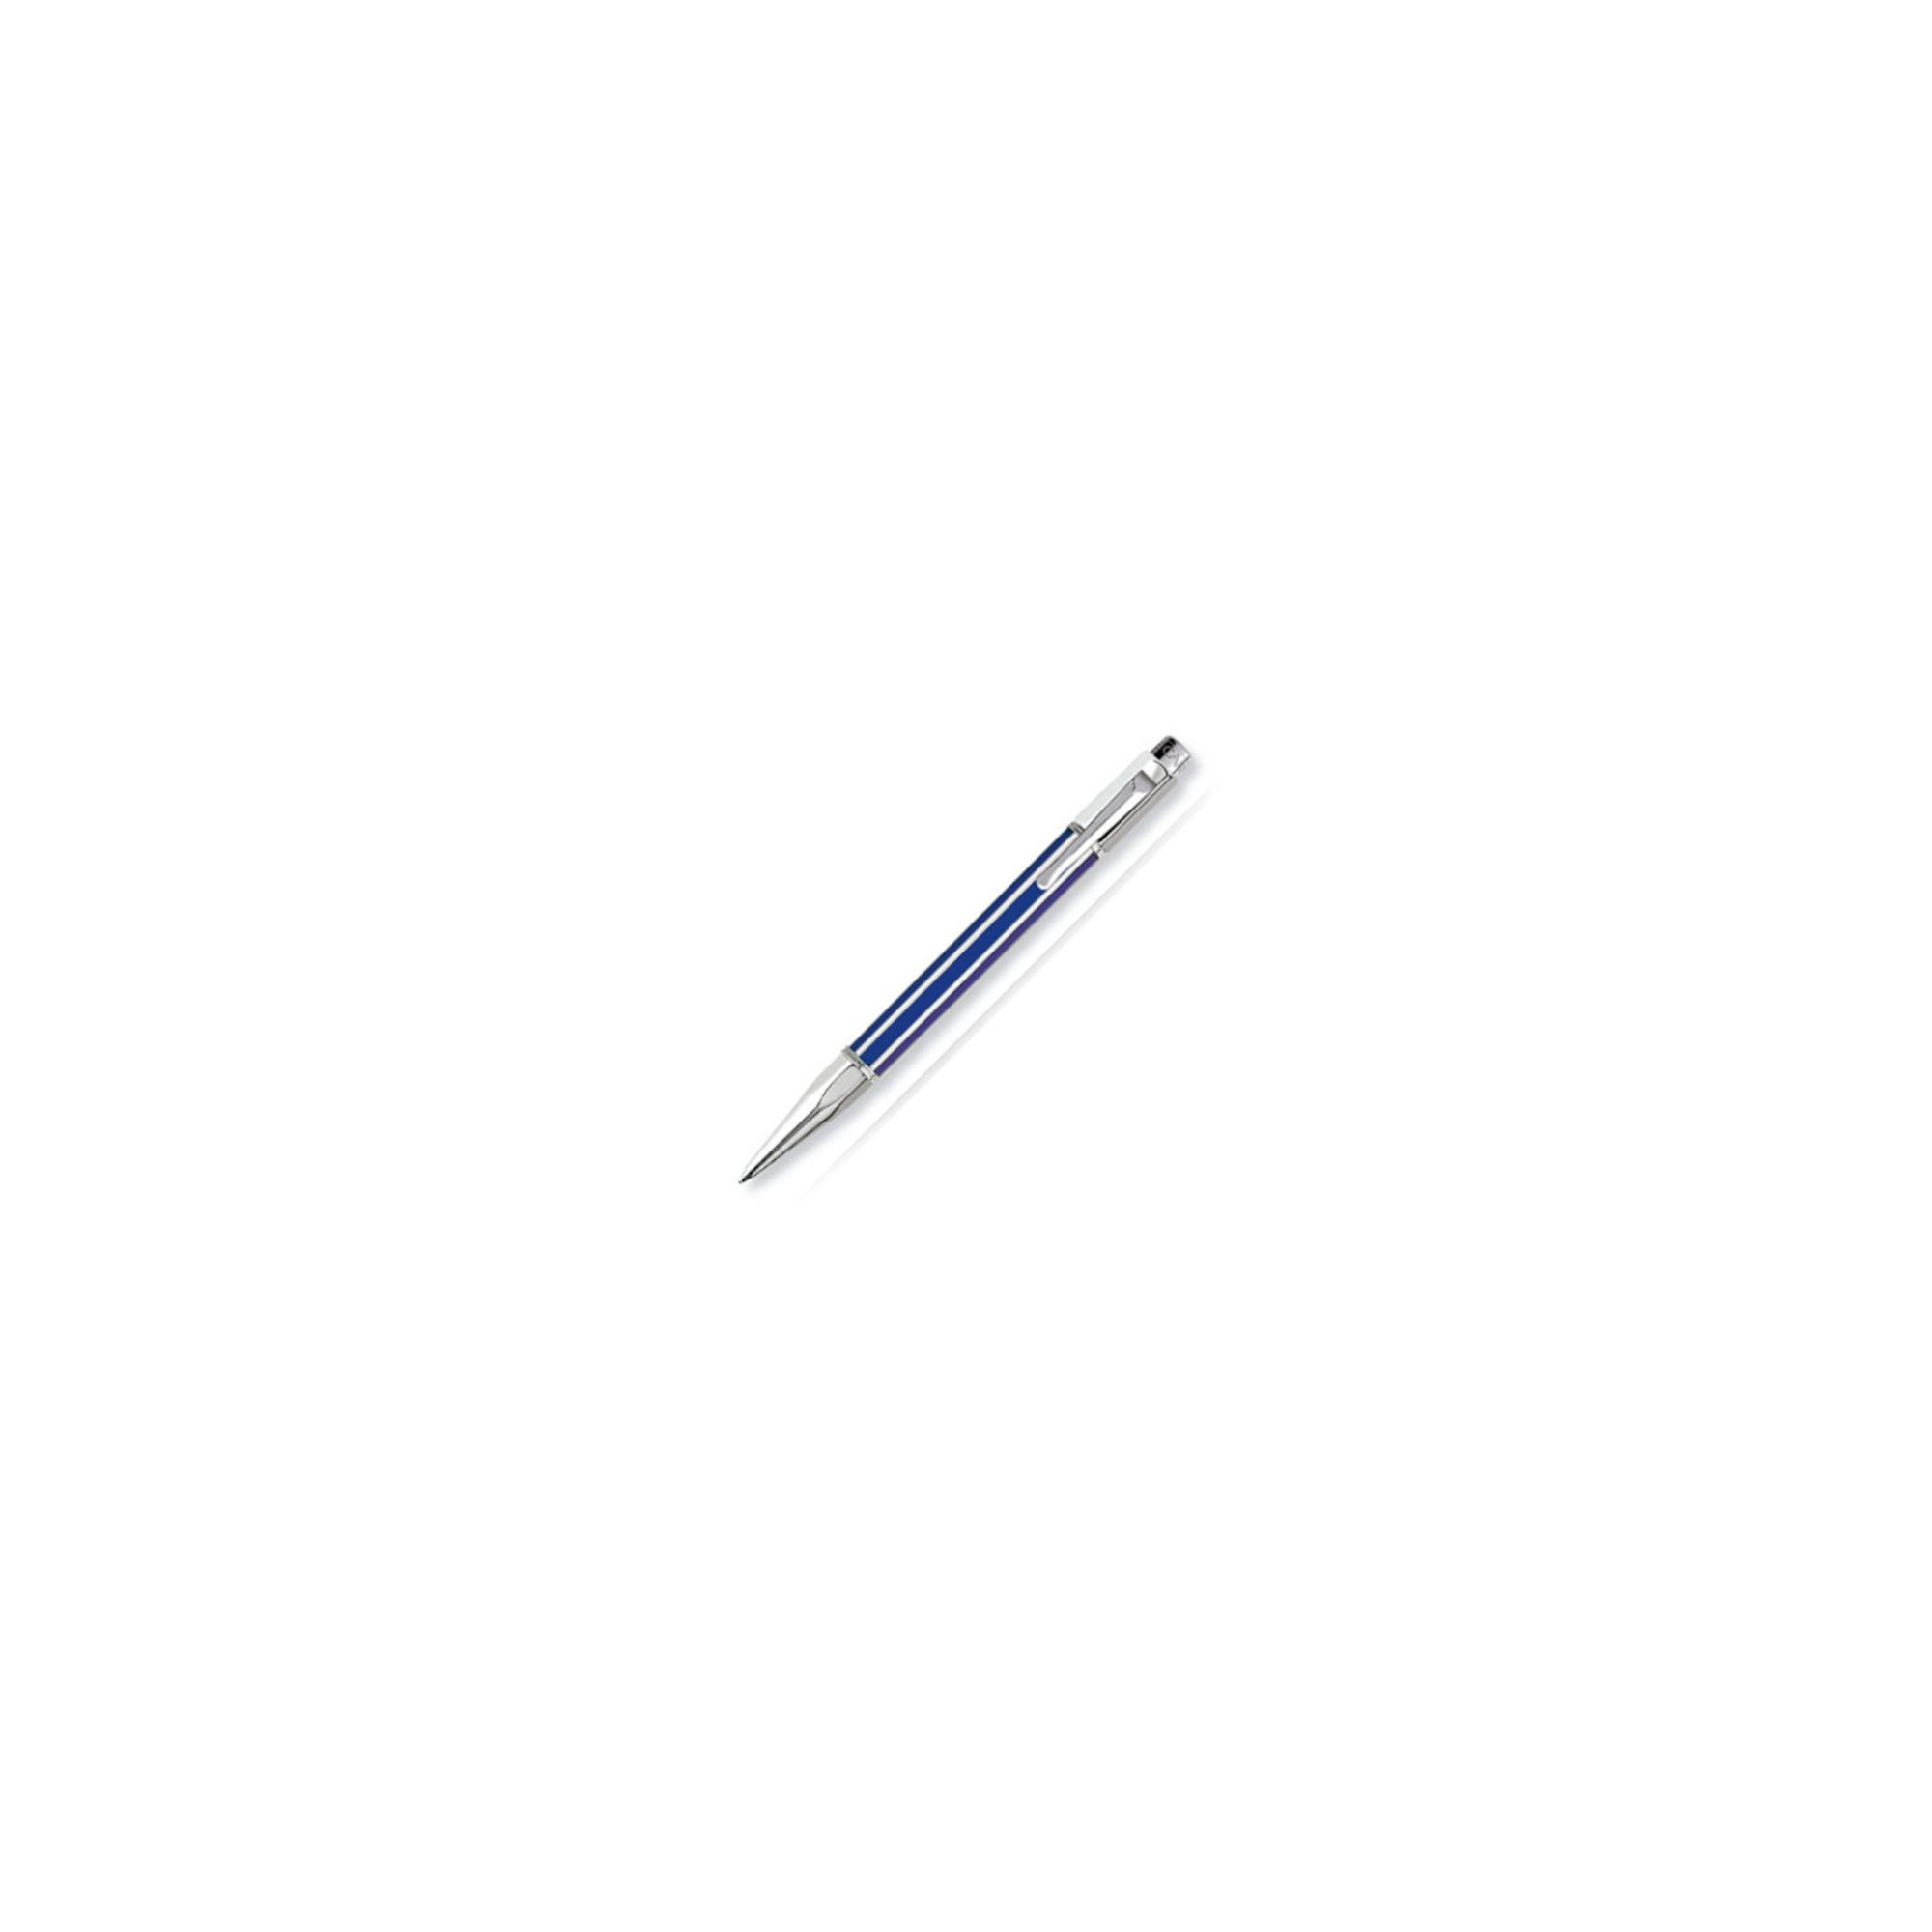 Caran d'Ache Varius China Blue Ballpoint Pen at Tesco Direct